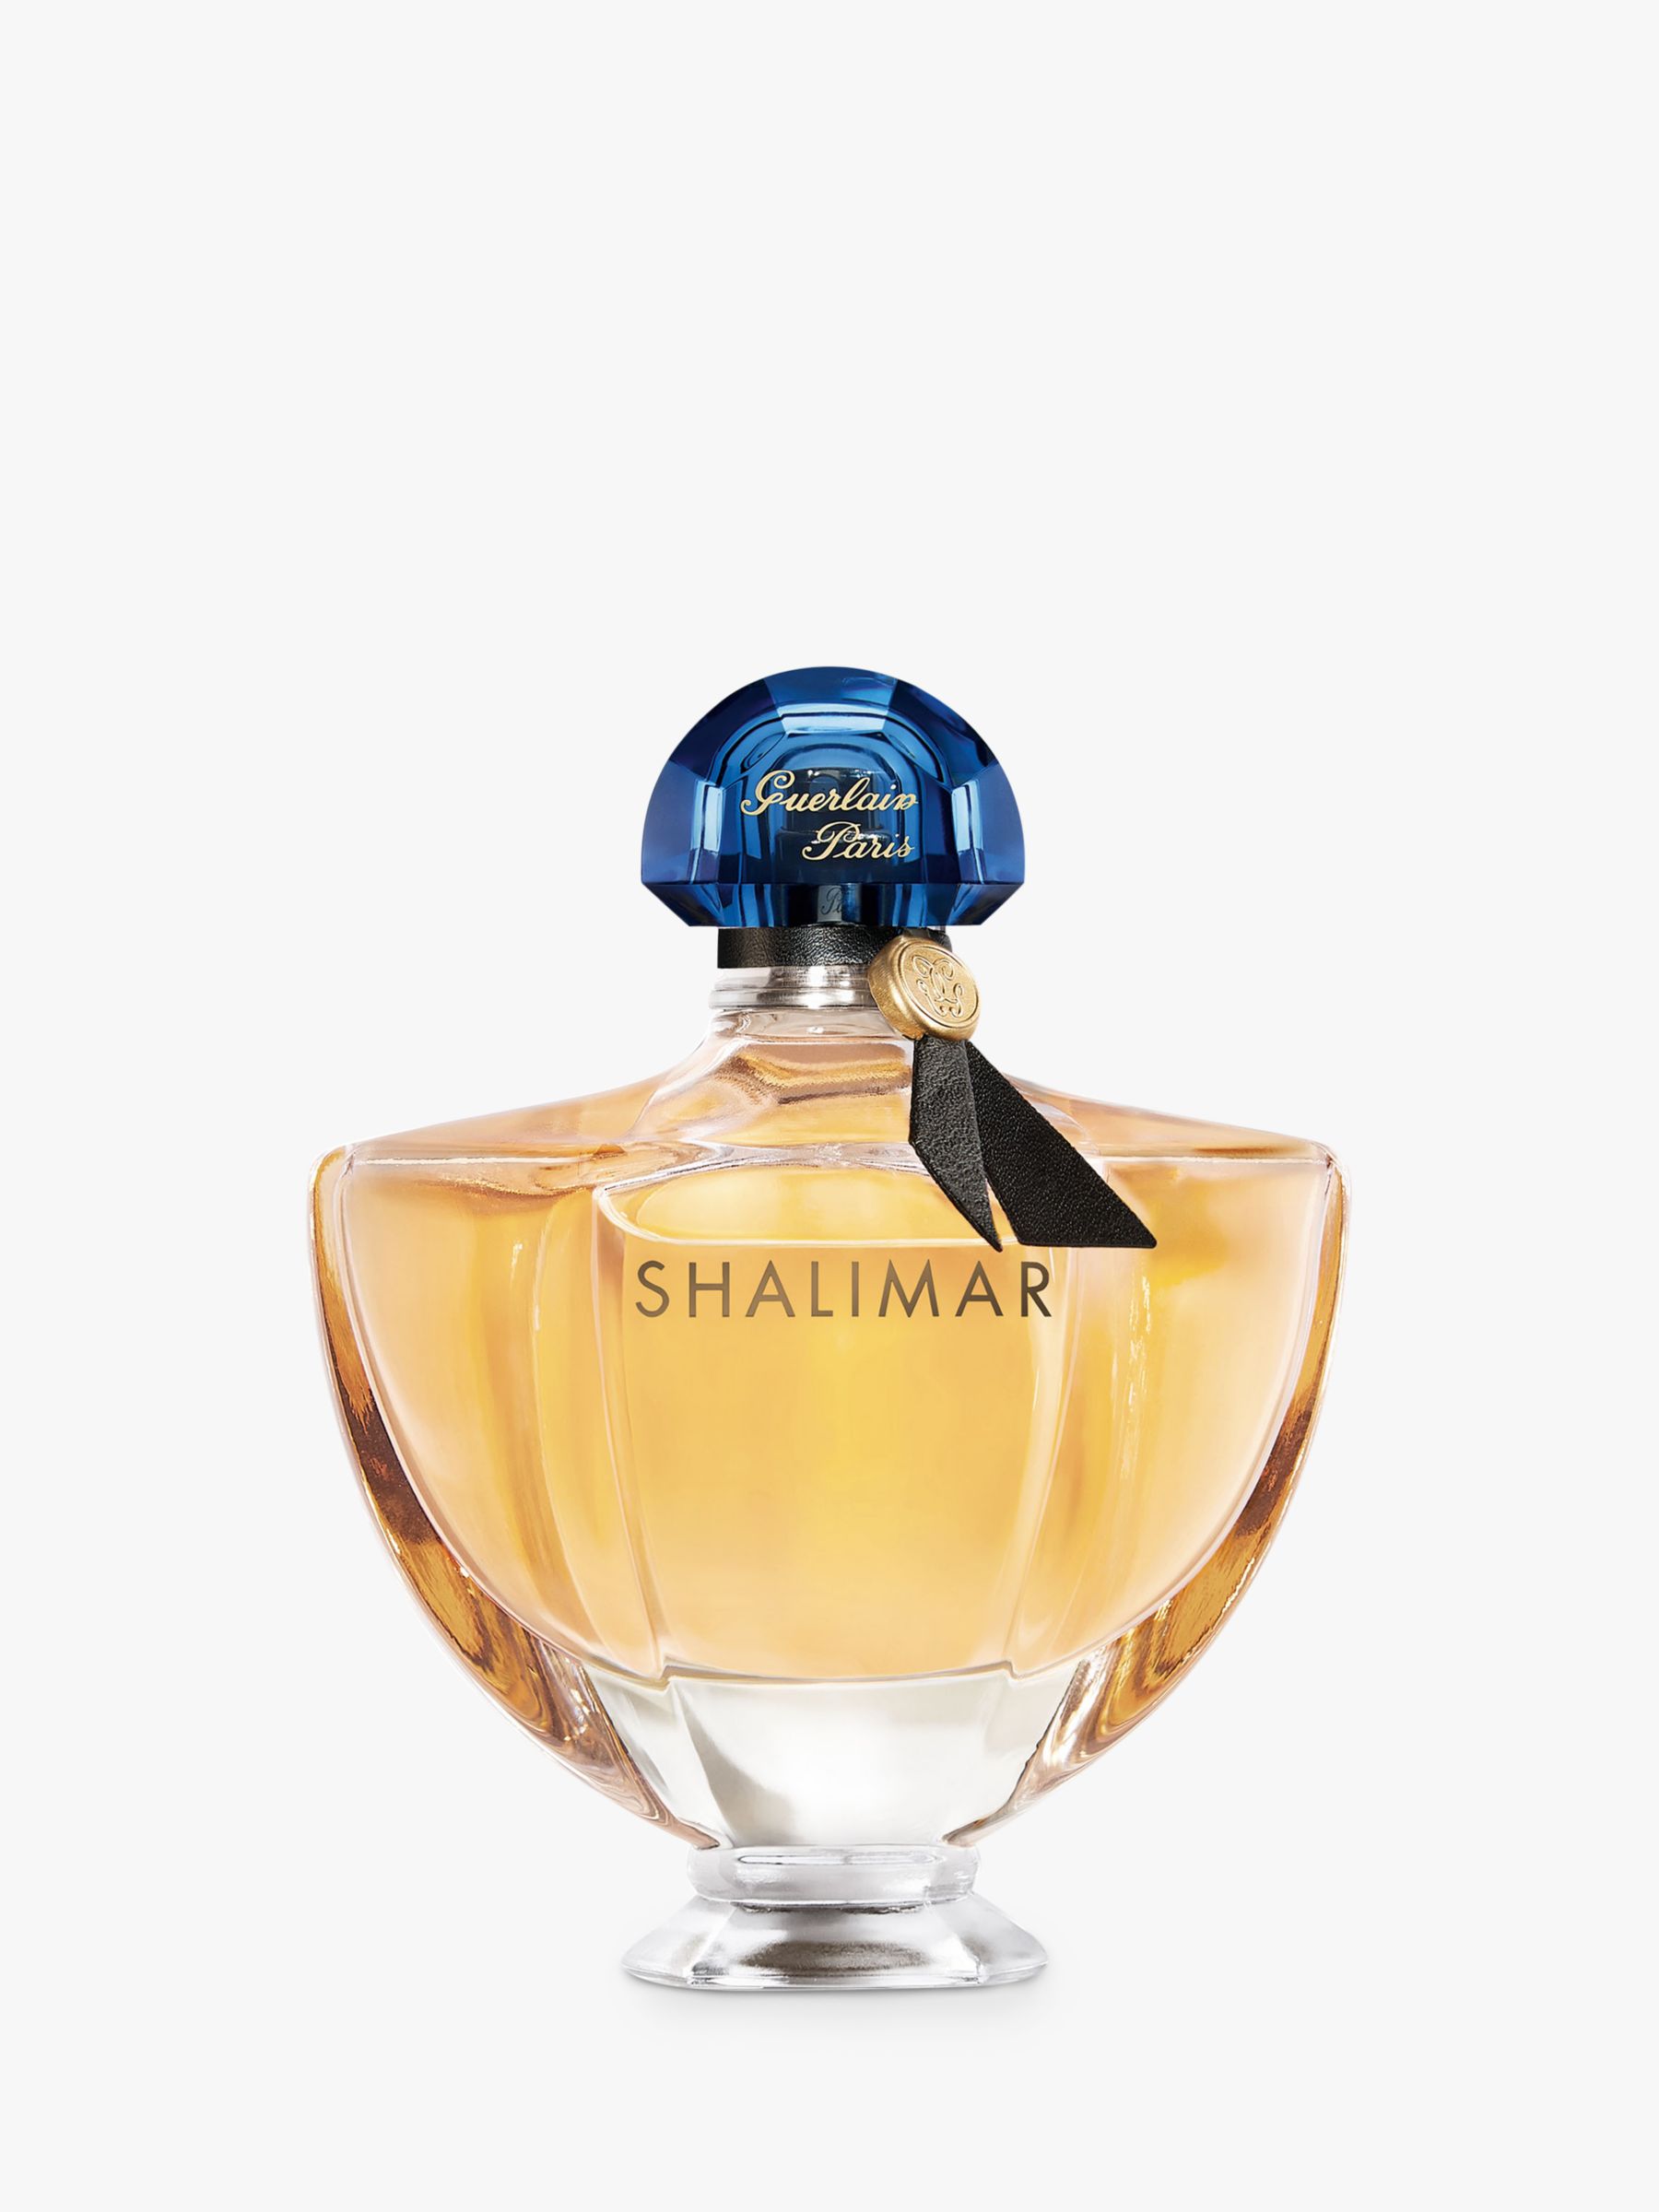 Dating Perfume Shalimar